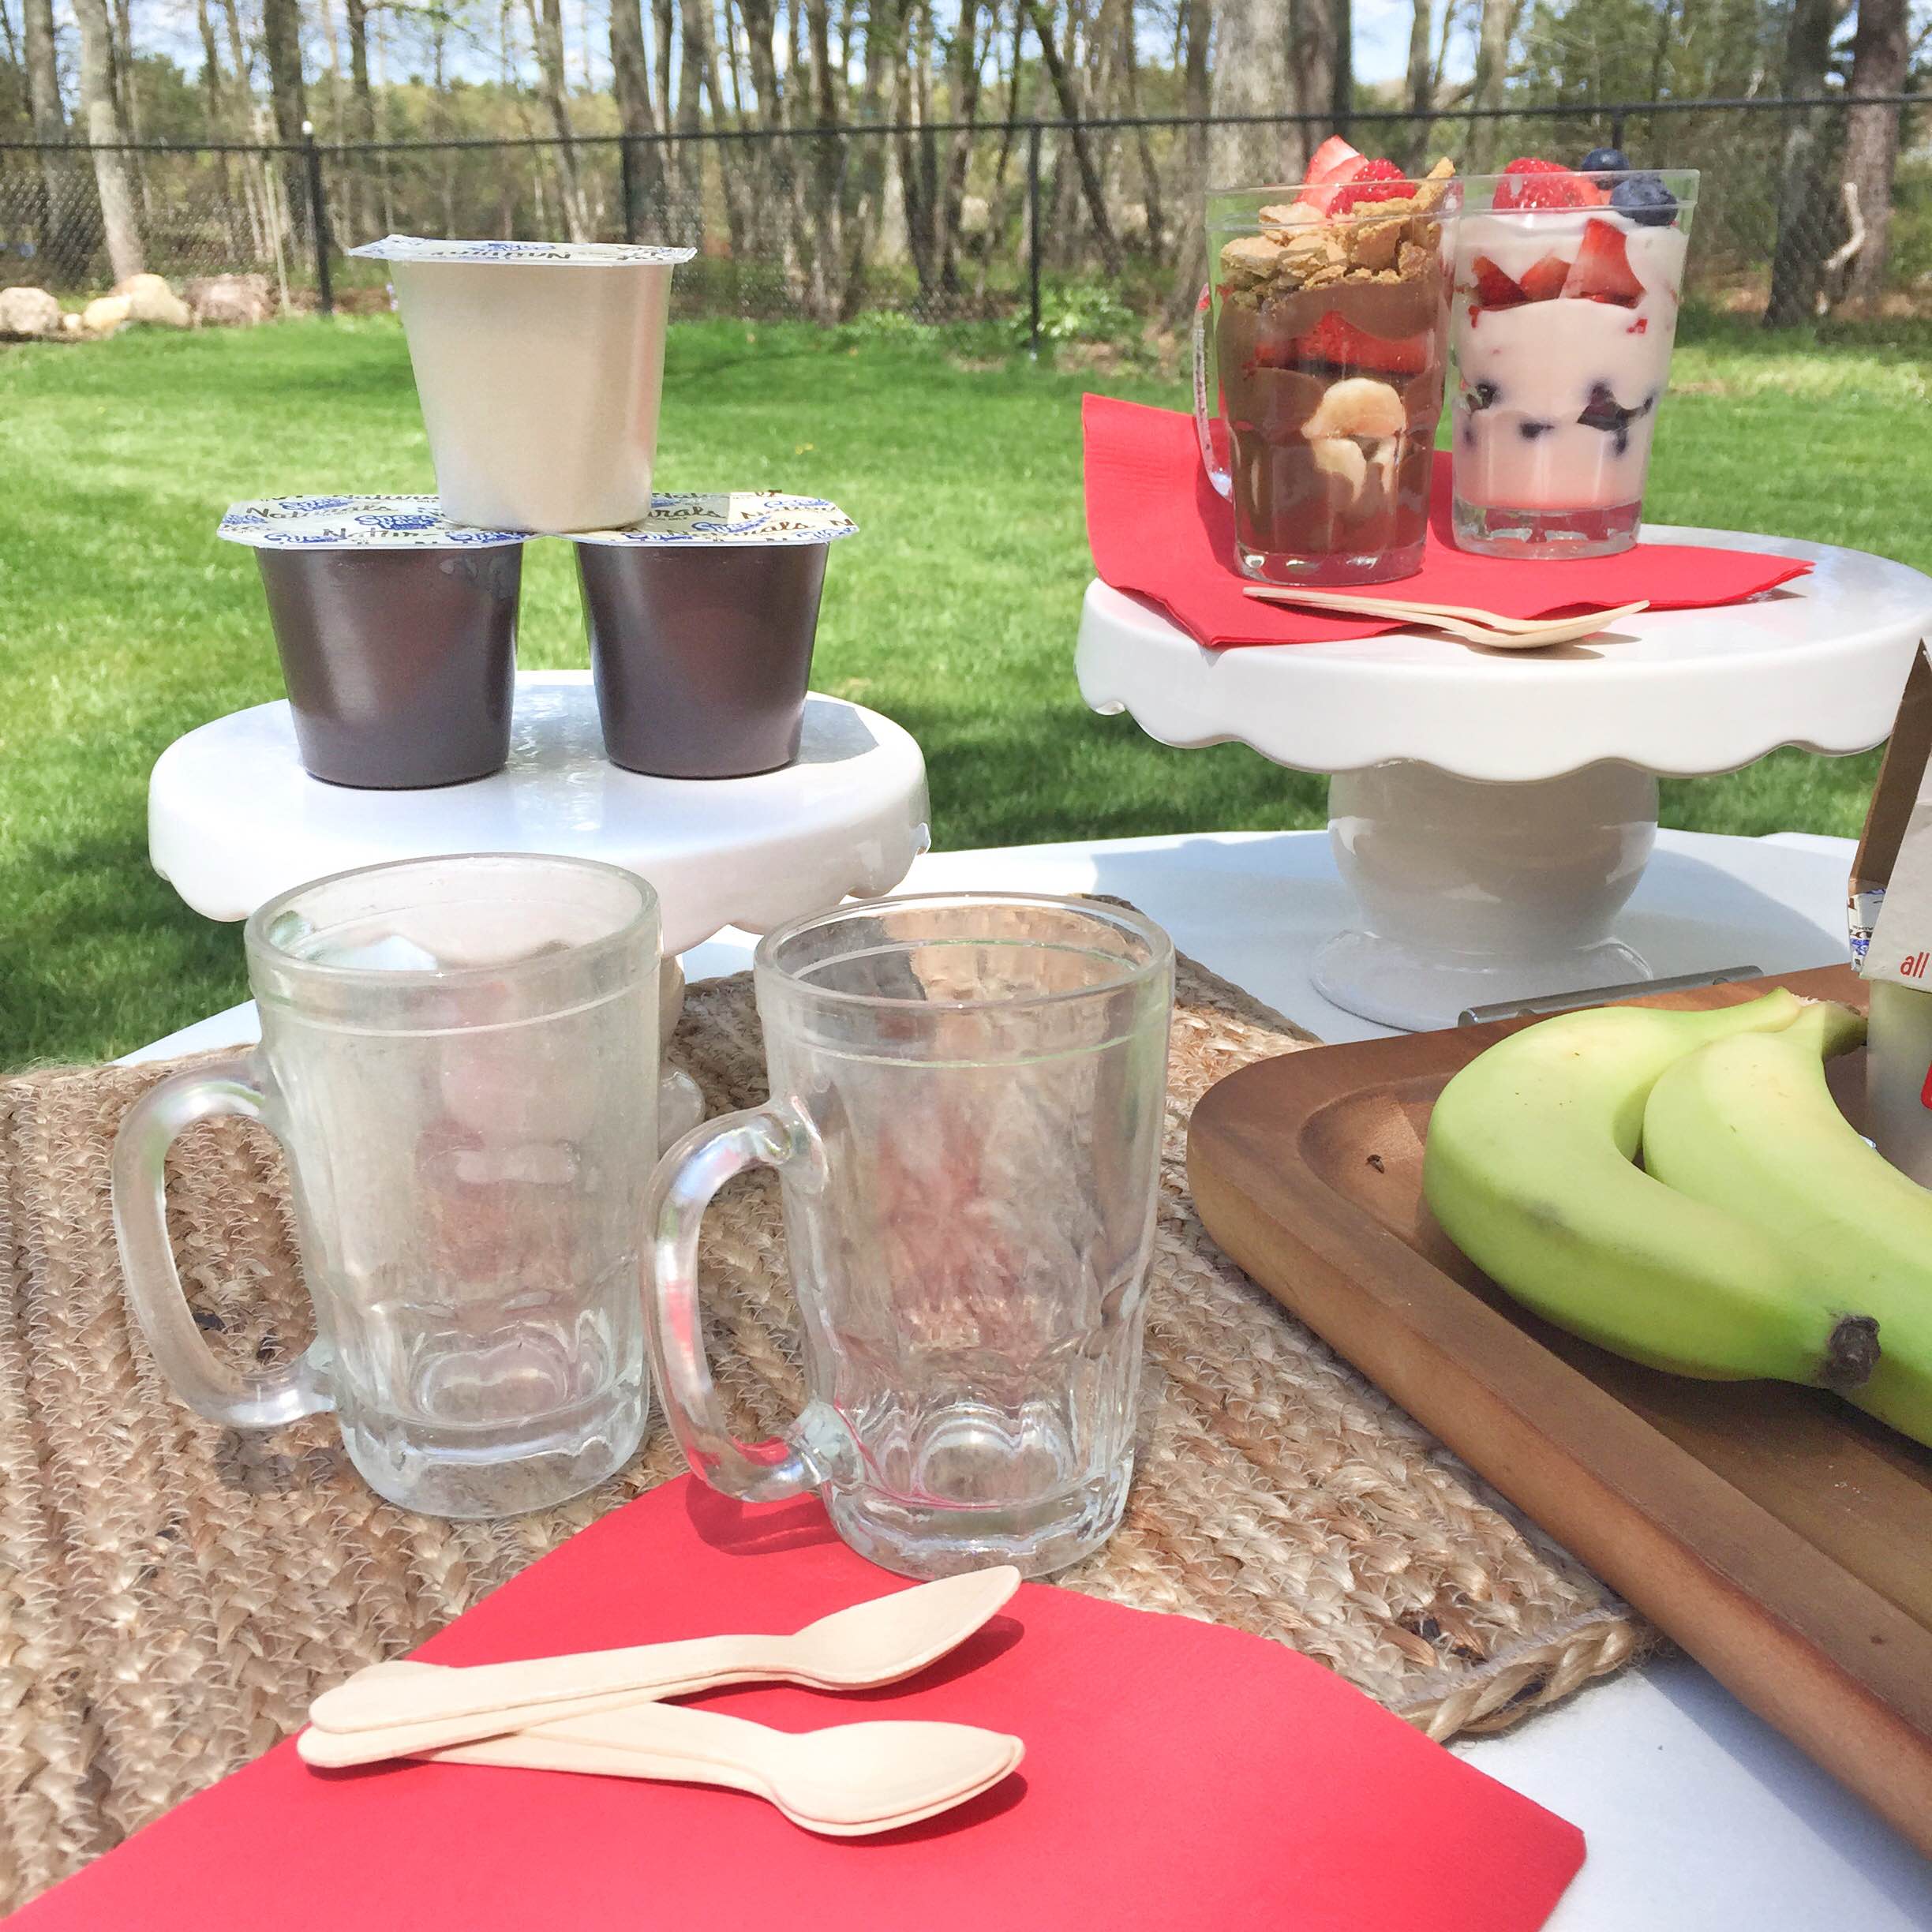 Summer Berry Pudding Parfaits - How to make pudding parfaits with snack pack naturals | Chocolate and vanilla pudding parfait recipe #SnackPackNaturals #ad GinaKirk.com @ginaekirk